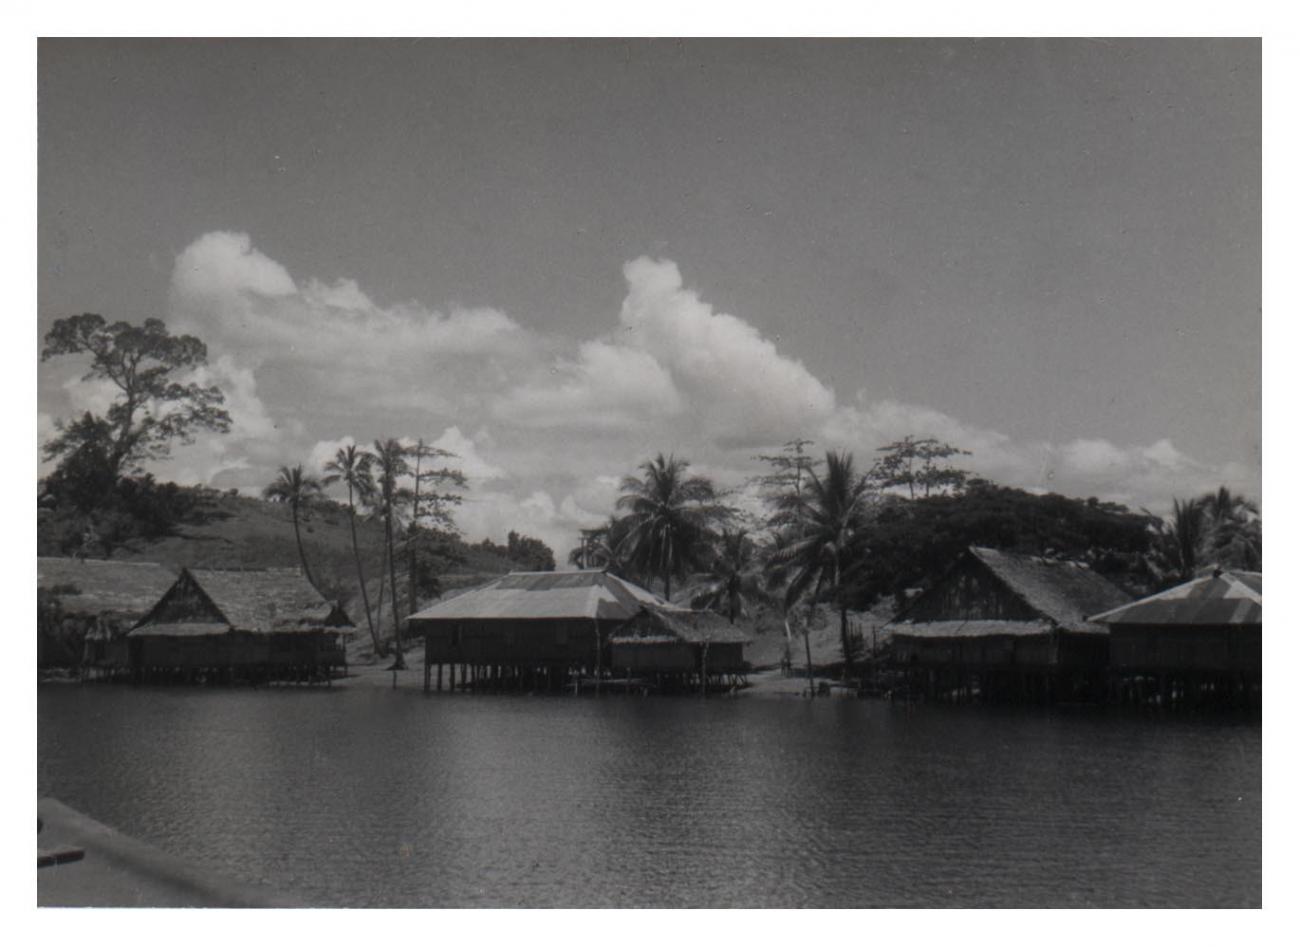 BD/54/2 - 
Kampong Ifar at coastal lake Sentani
